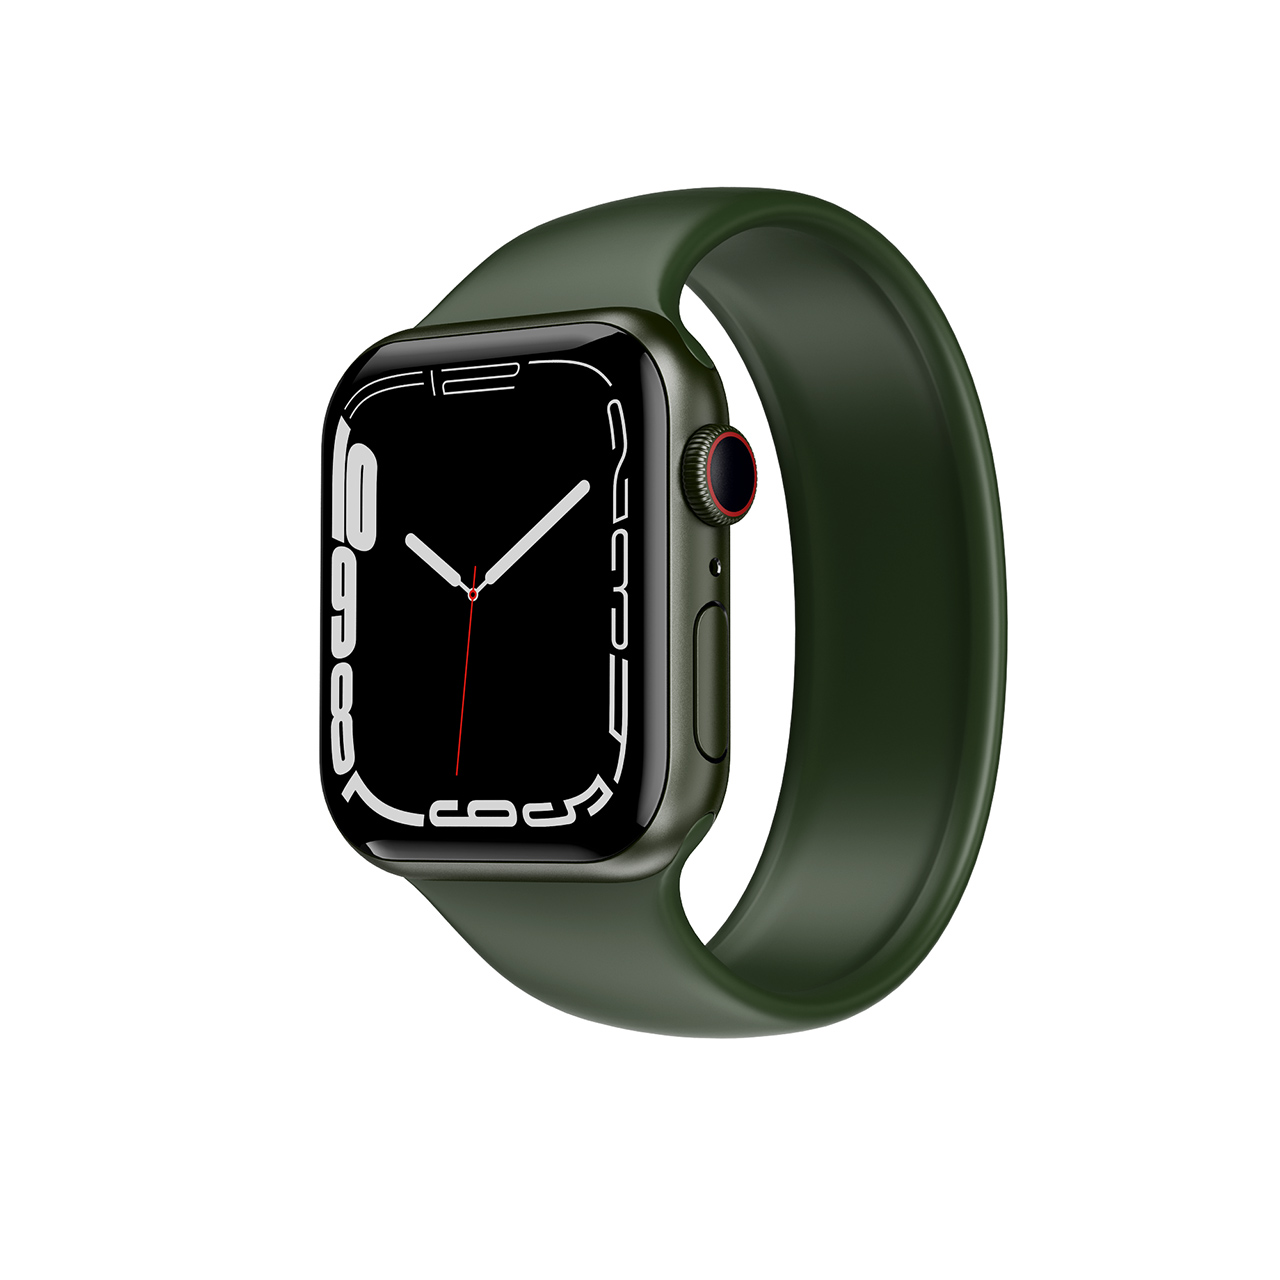 Apple Watch Series 7 2021 by Apple